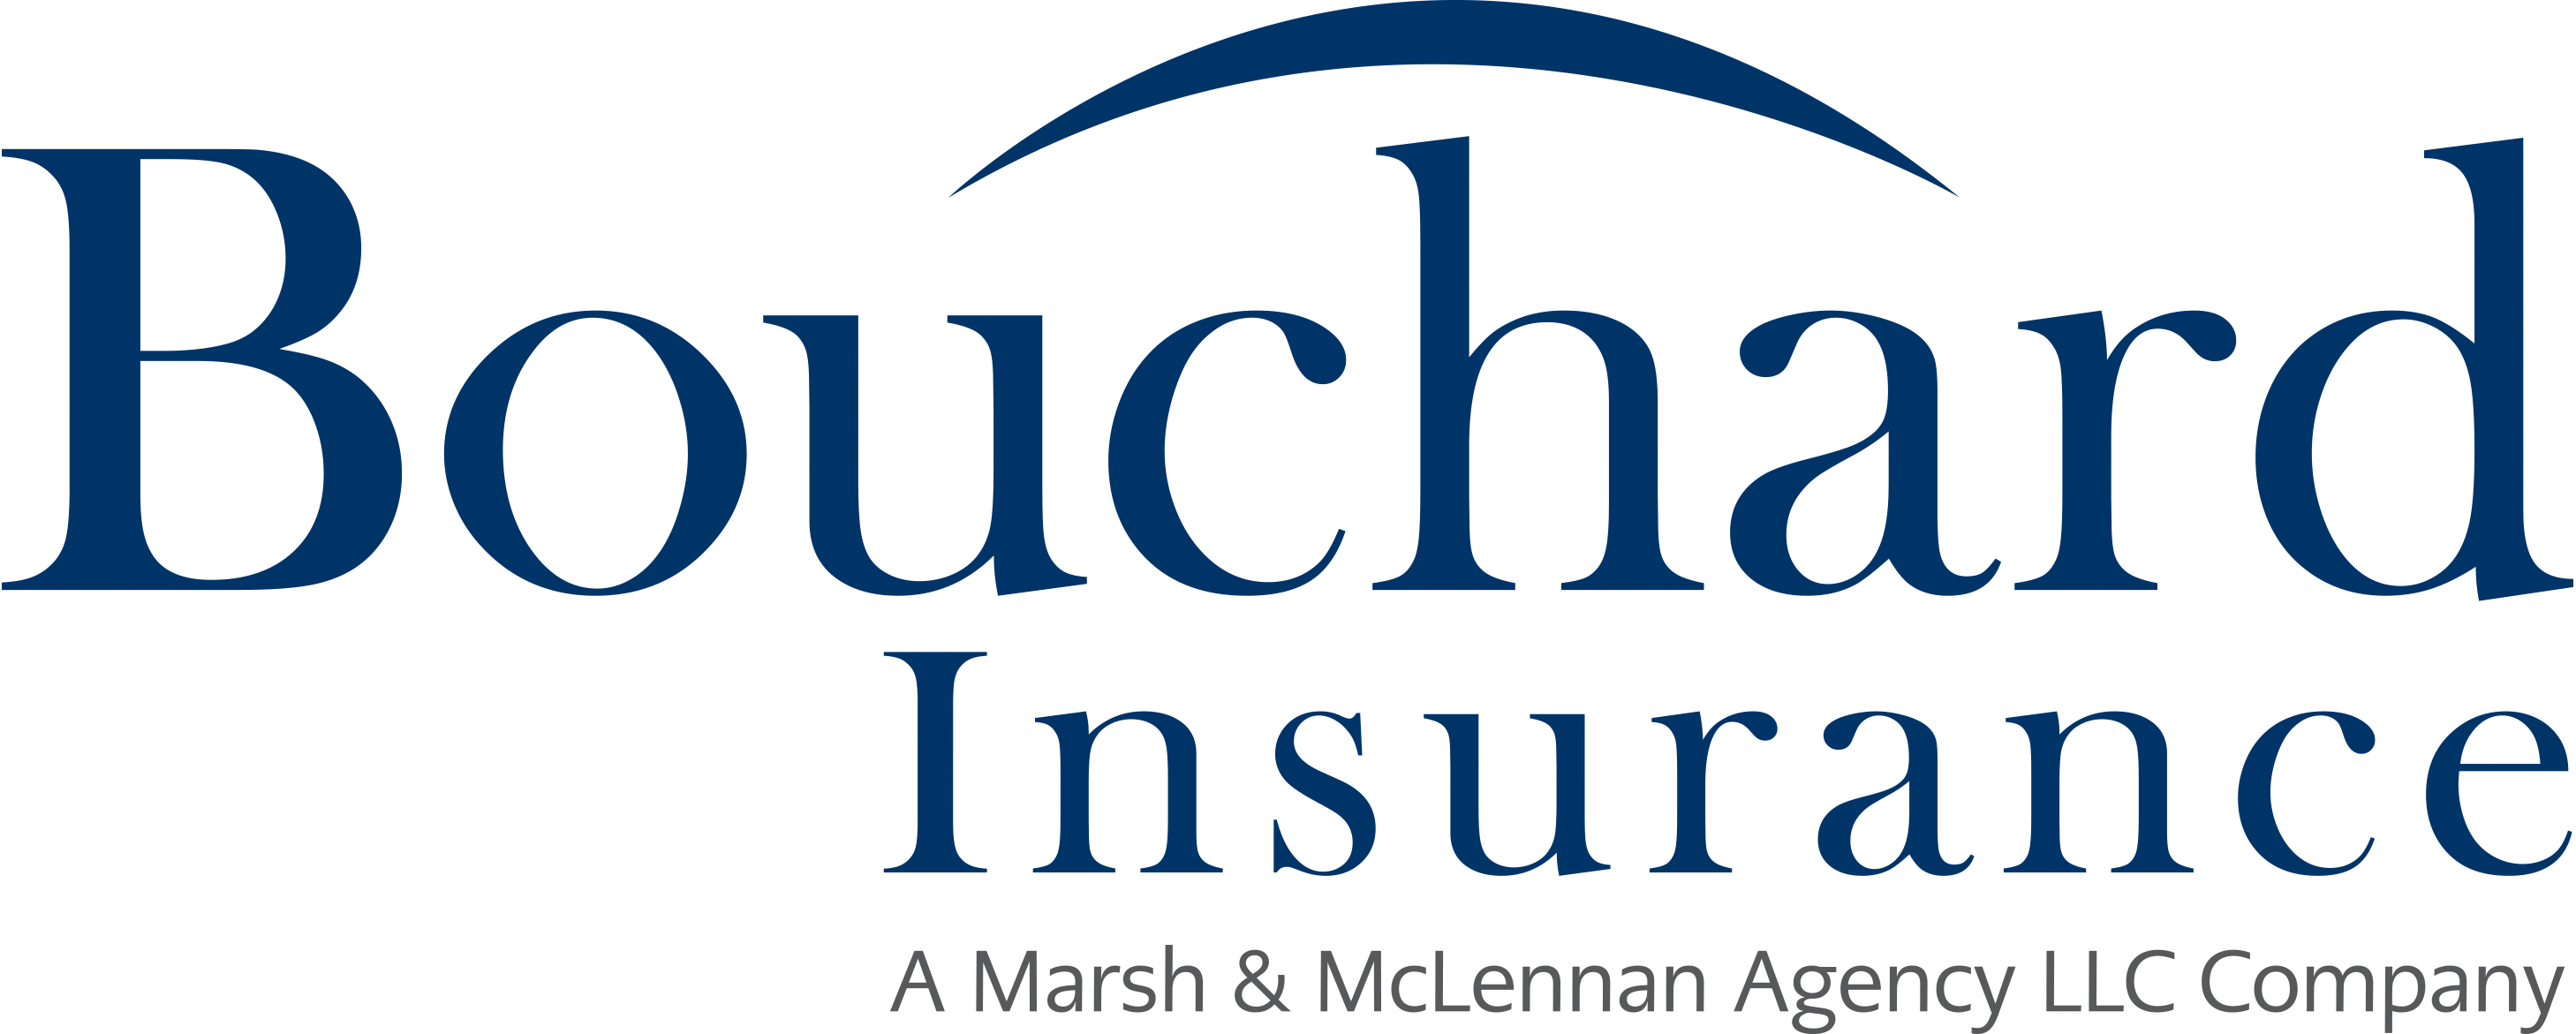 Bouchard Insurance 